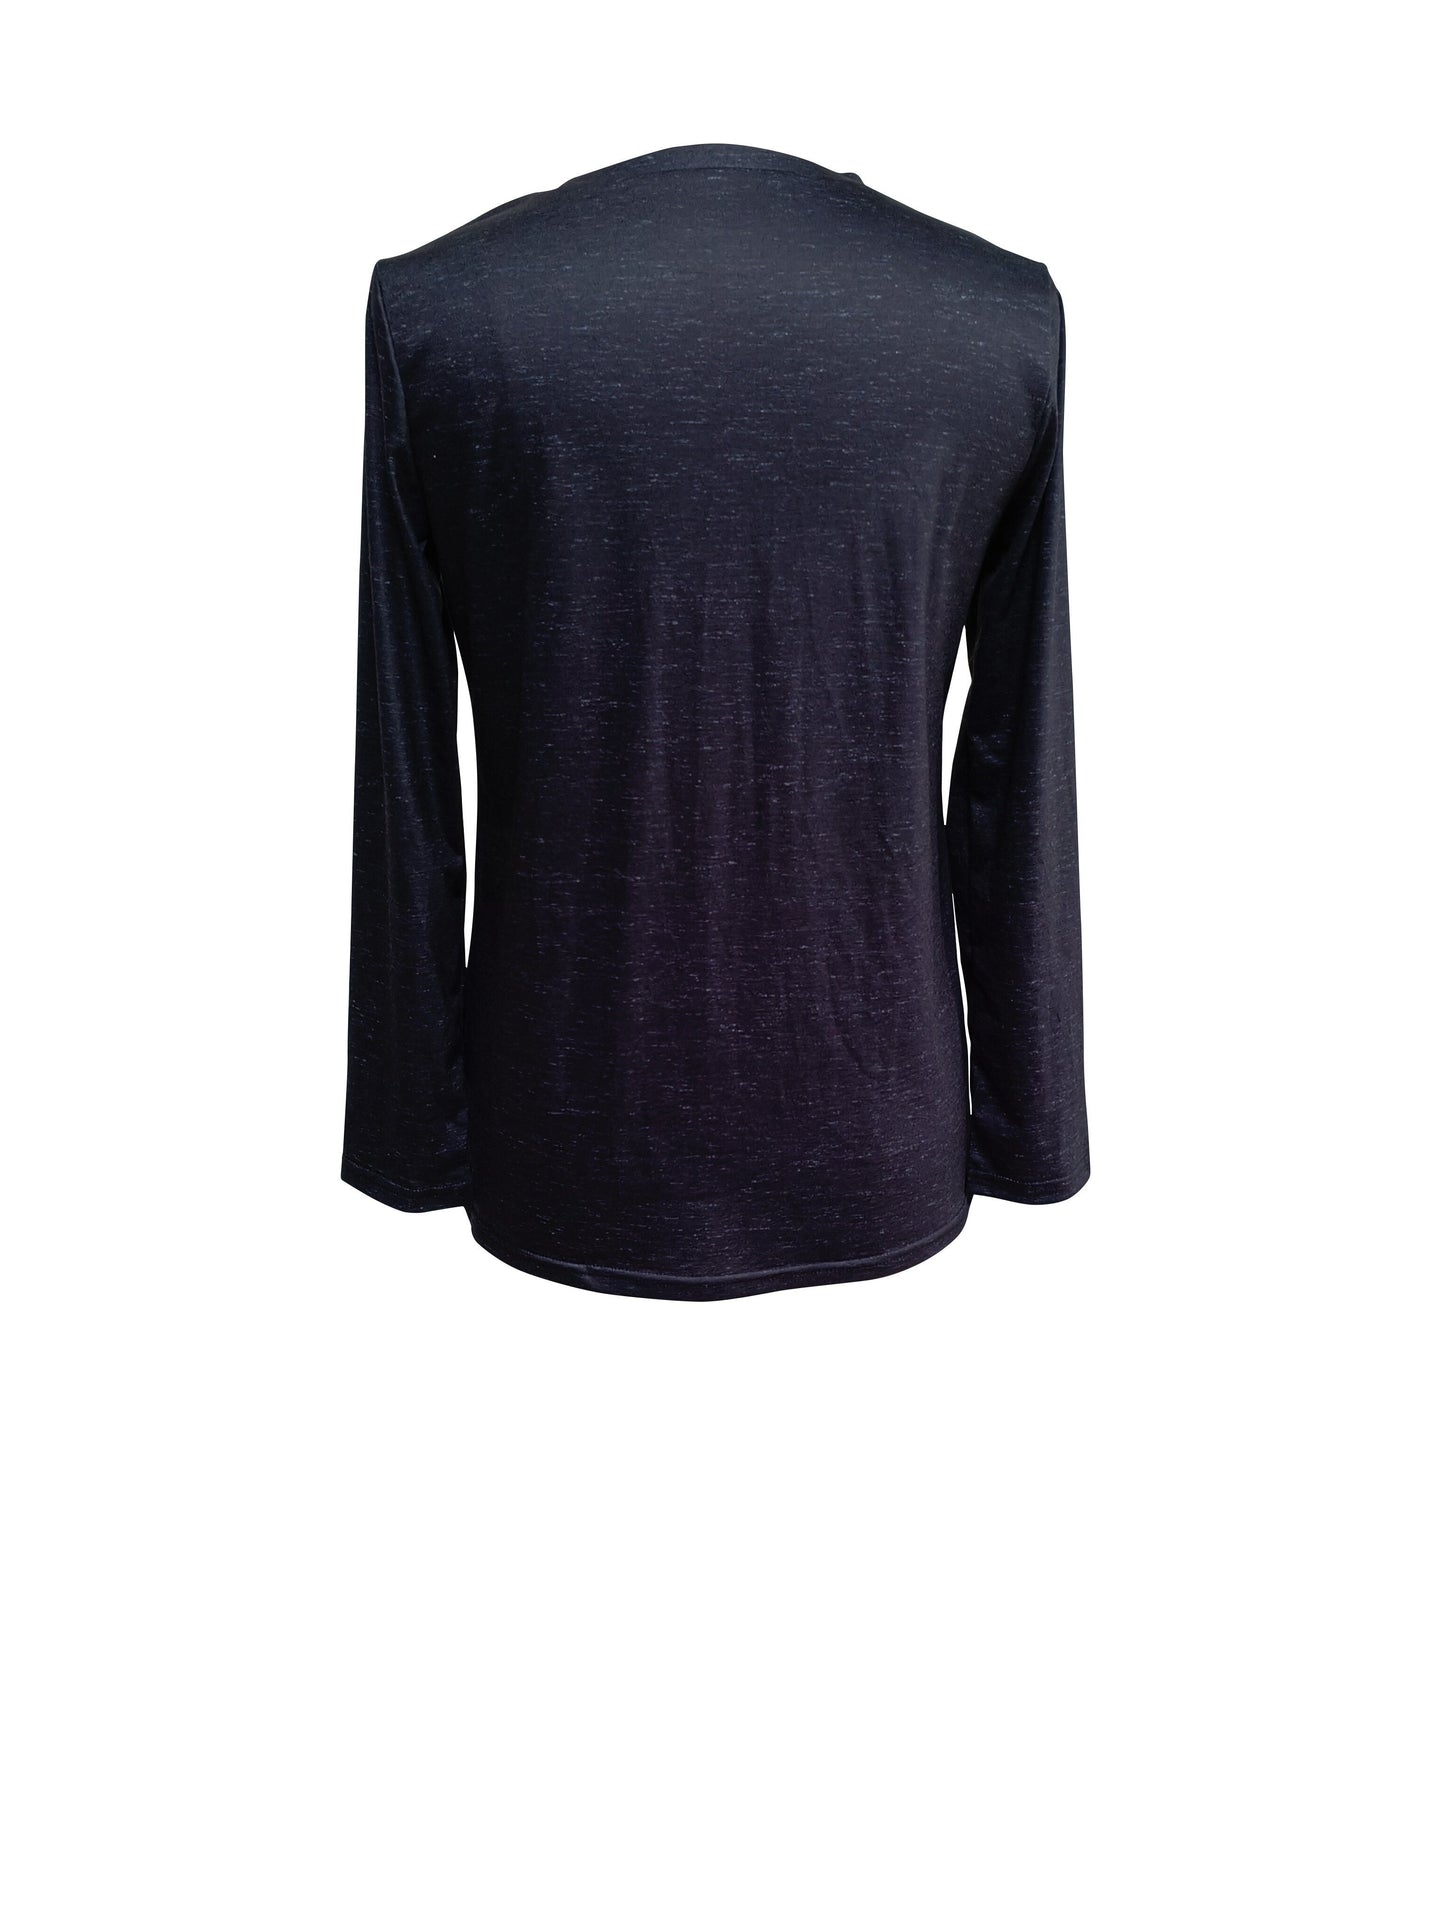 Sun & Moon Print T-shirt, Casual Long Sleeve Top For Spring & Fall, Women's Clothing